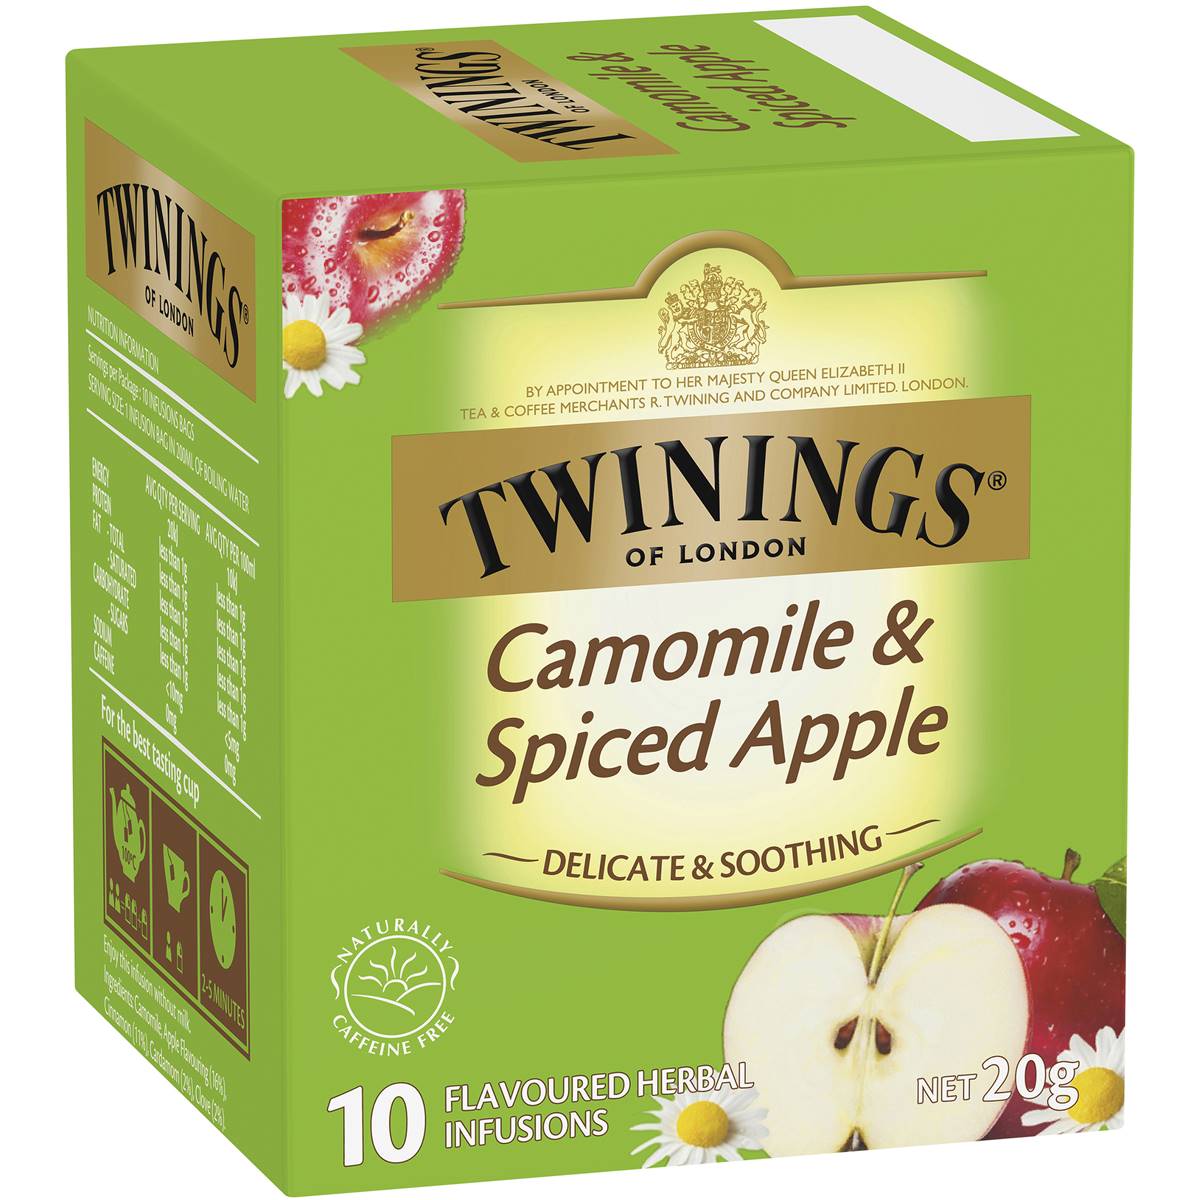 Twinings Camomile & Spiced Apple Tea bags 20g x 10